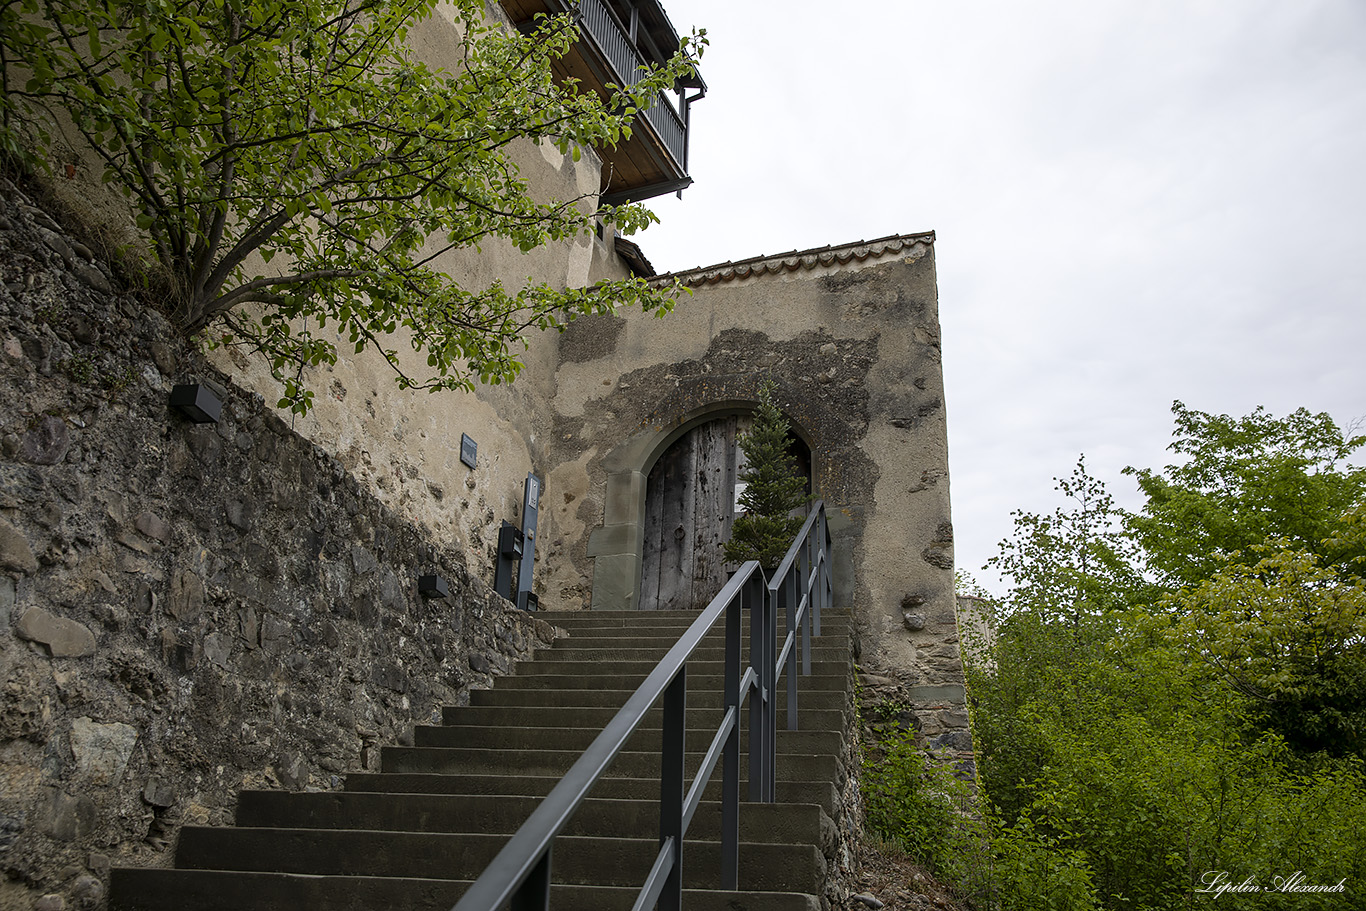 Замок Хоэнклинген  - Burg Hohenklingen - Швейцария (Switzerland)